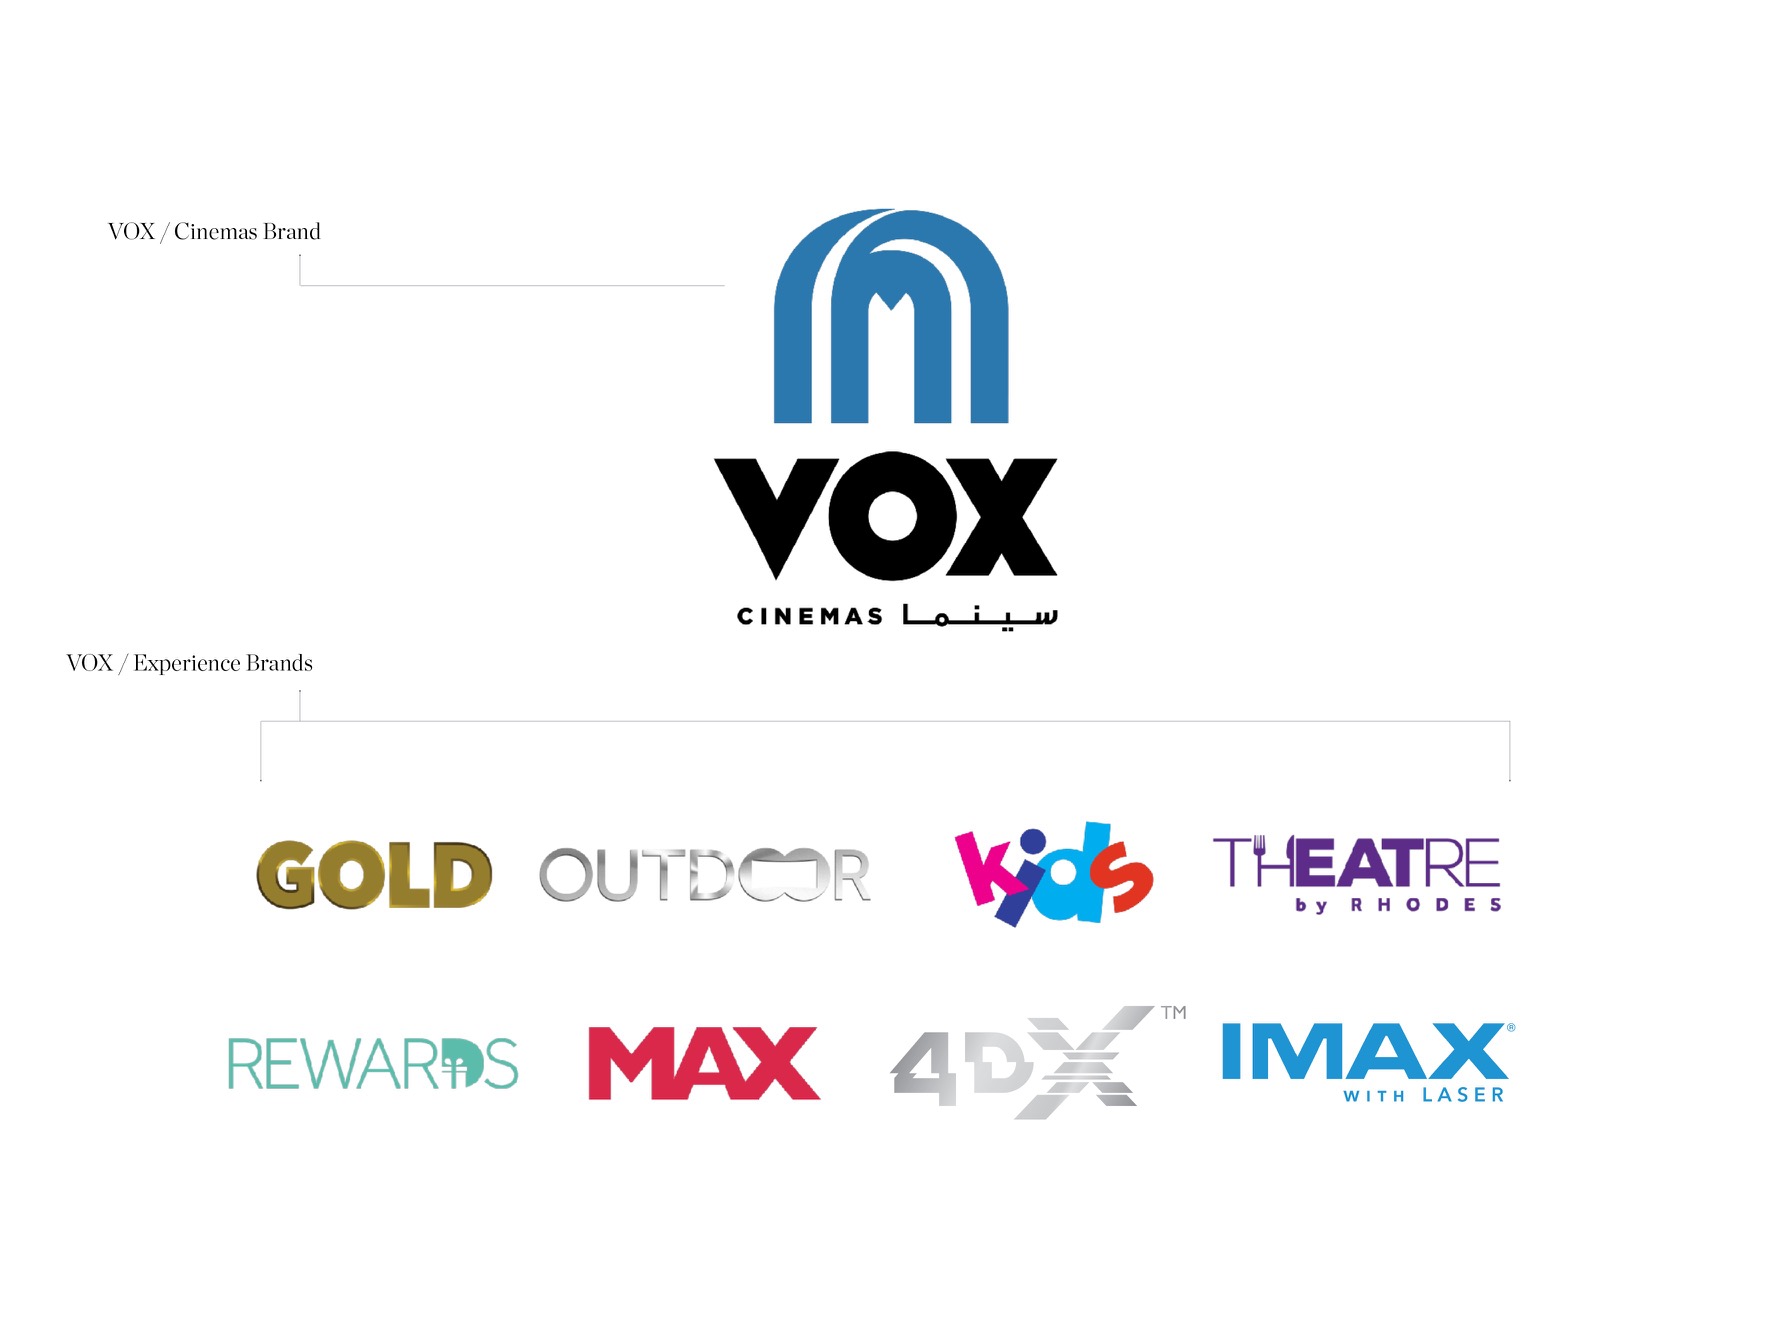 Vox cinema movies